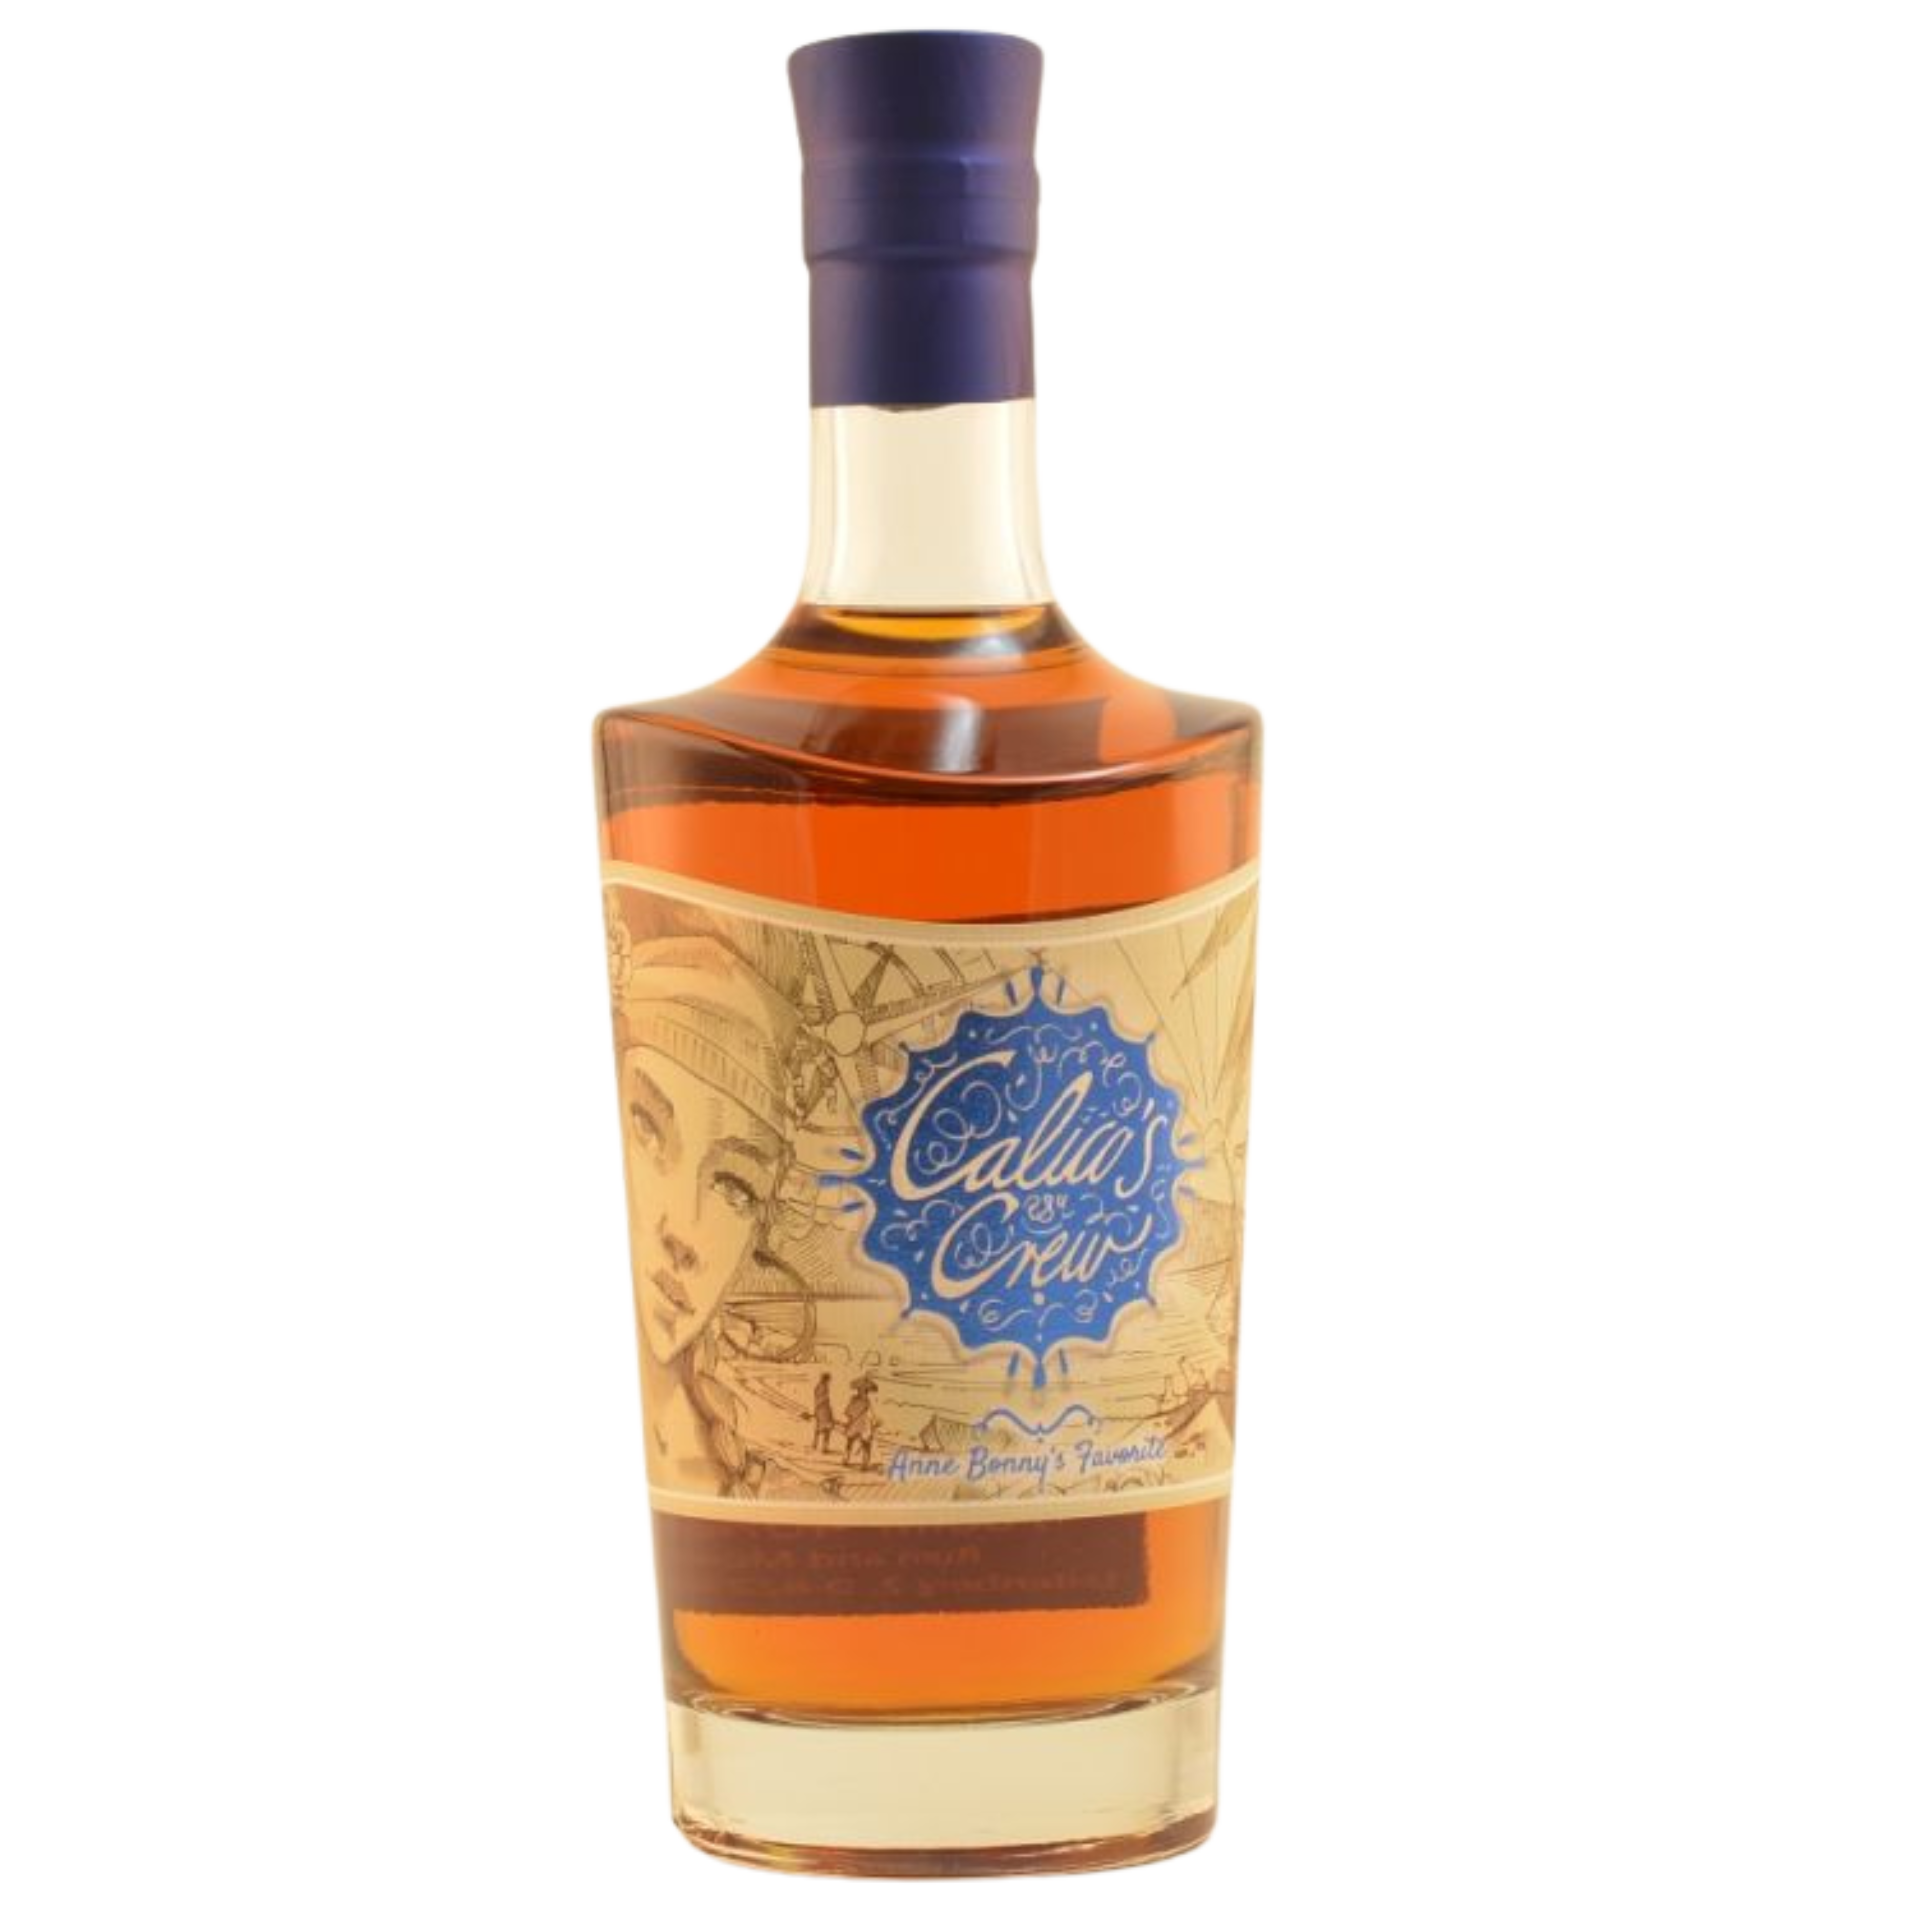 Calico's Crew Rum Anne Bonny's Favorite 40% 0,7l